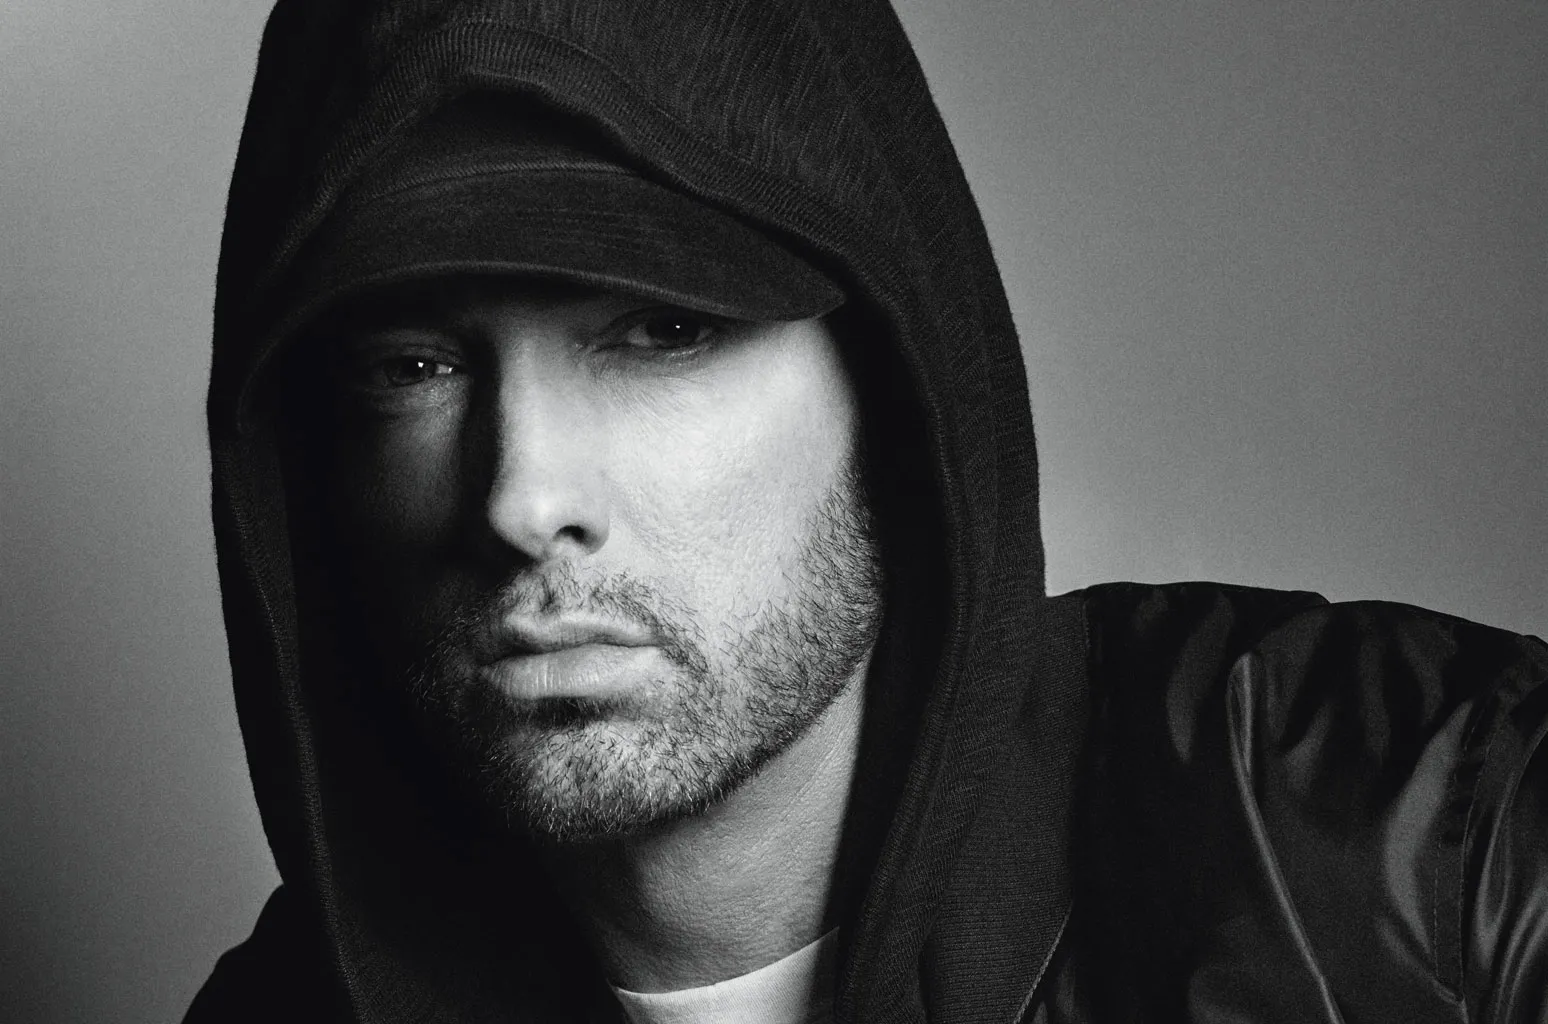 Sarah Mathers: Eminem's Accomplished Half-Sister In The Spotlight